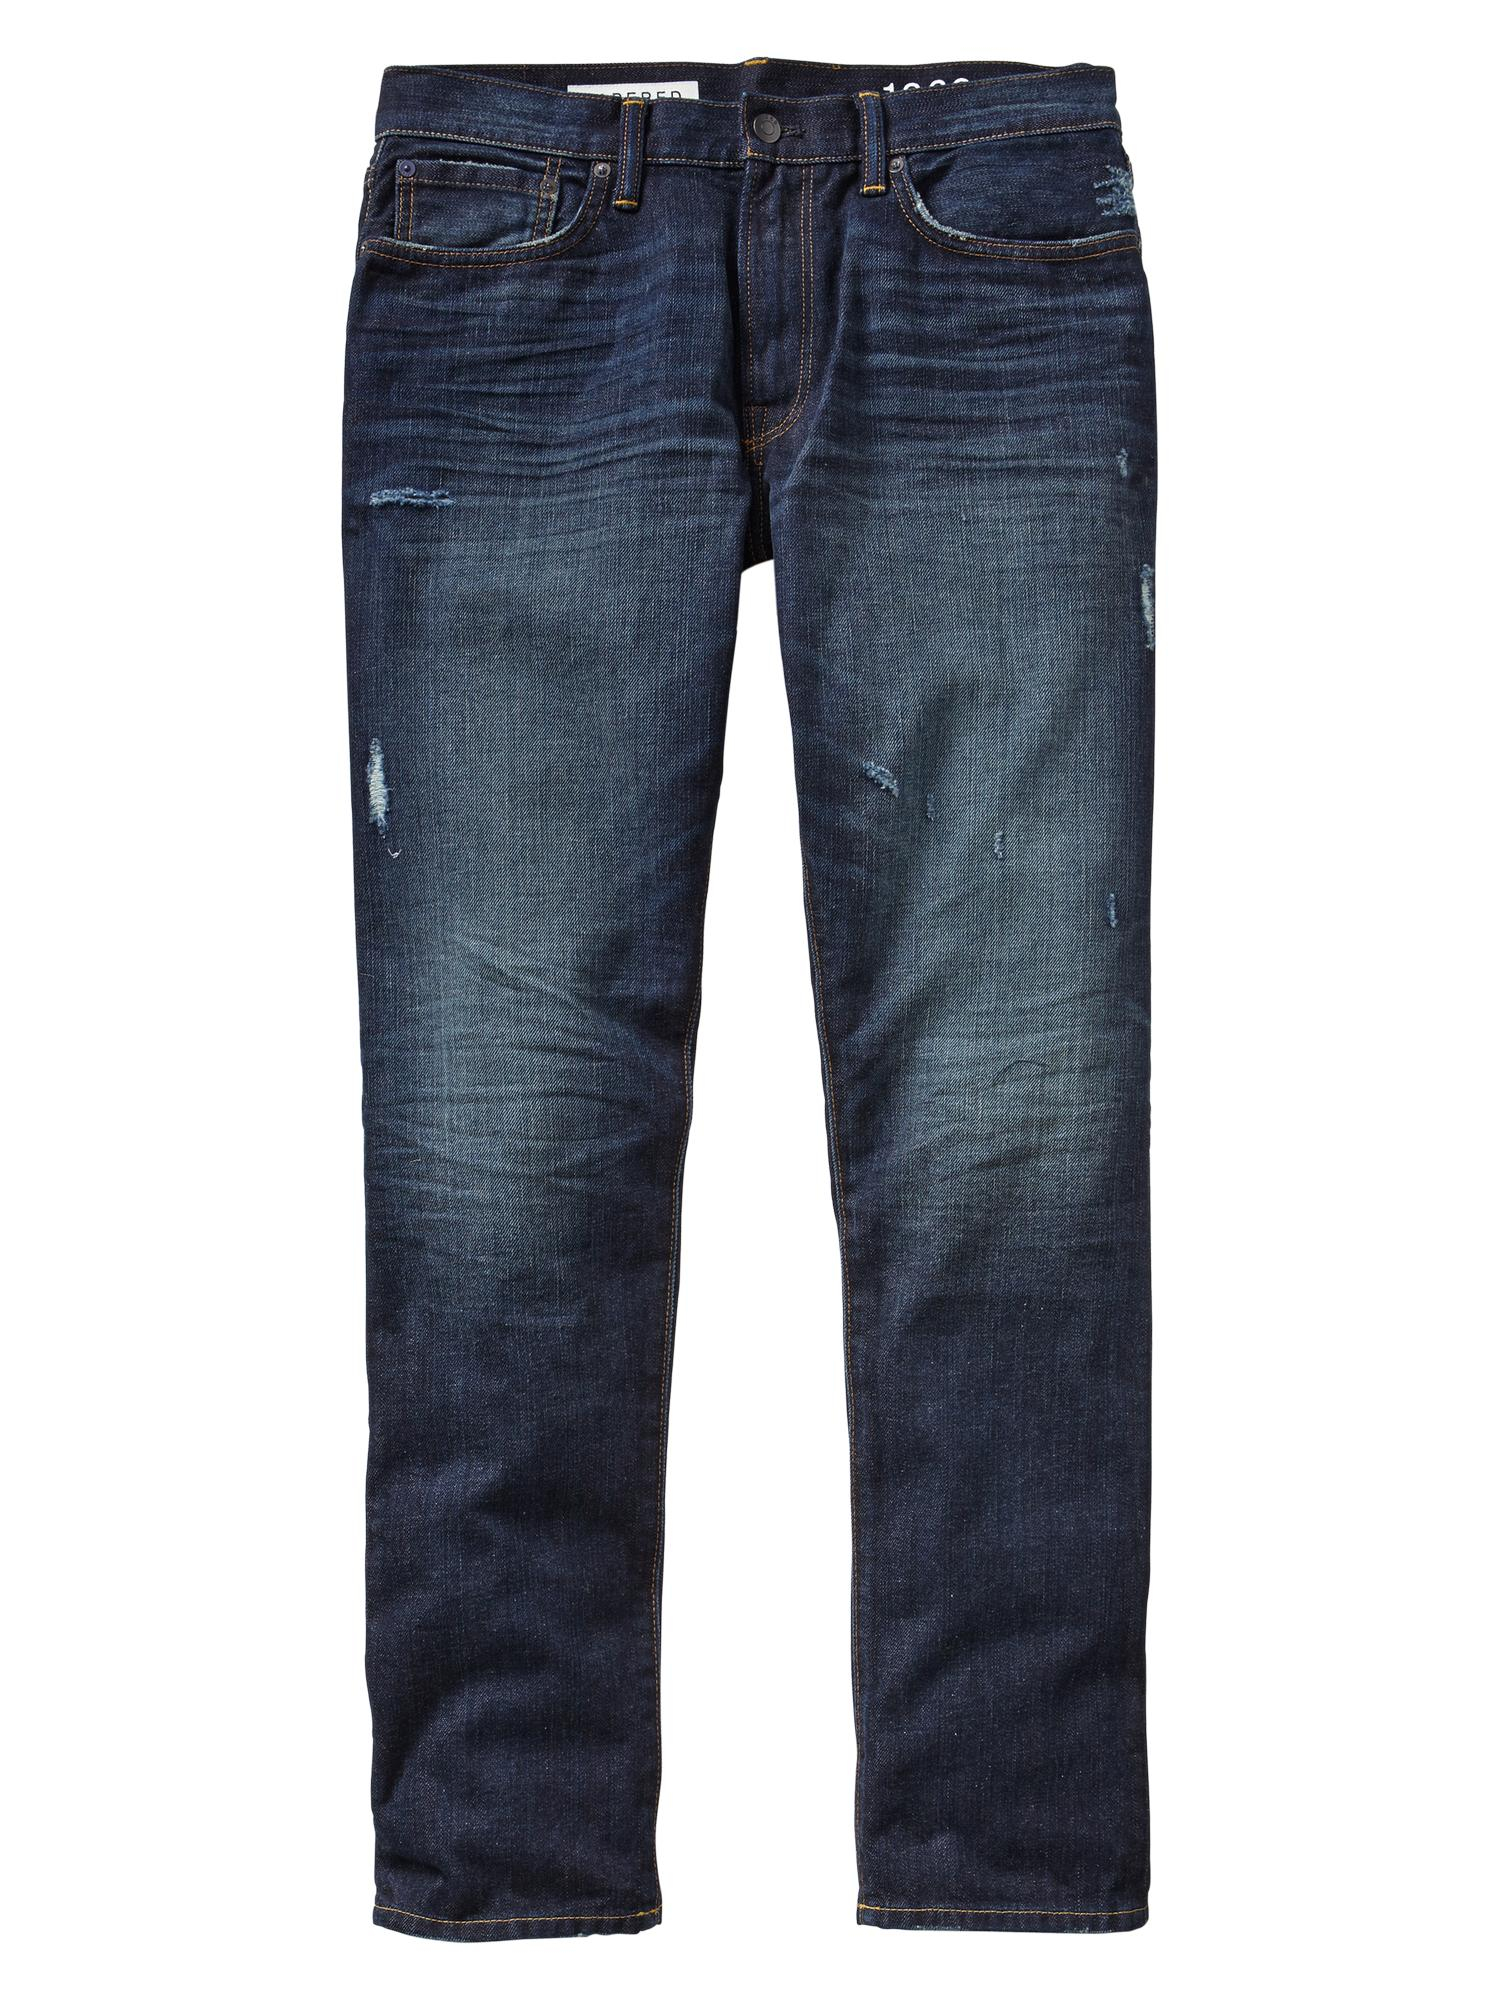 Gap 1969 Standard Taper Fit Jeans (Dark Indigo Destructed Wash) in Blue ...